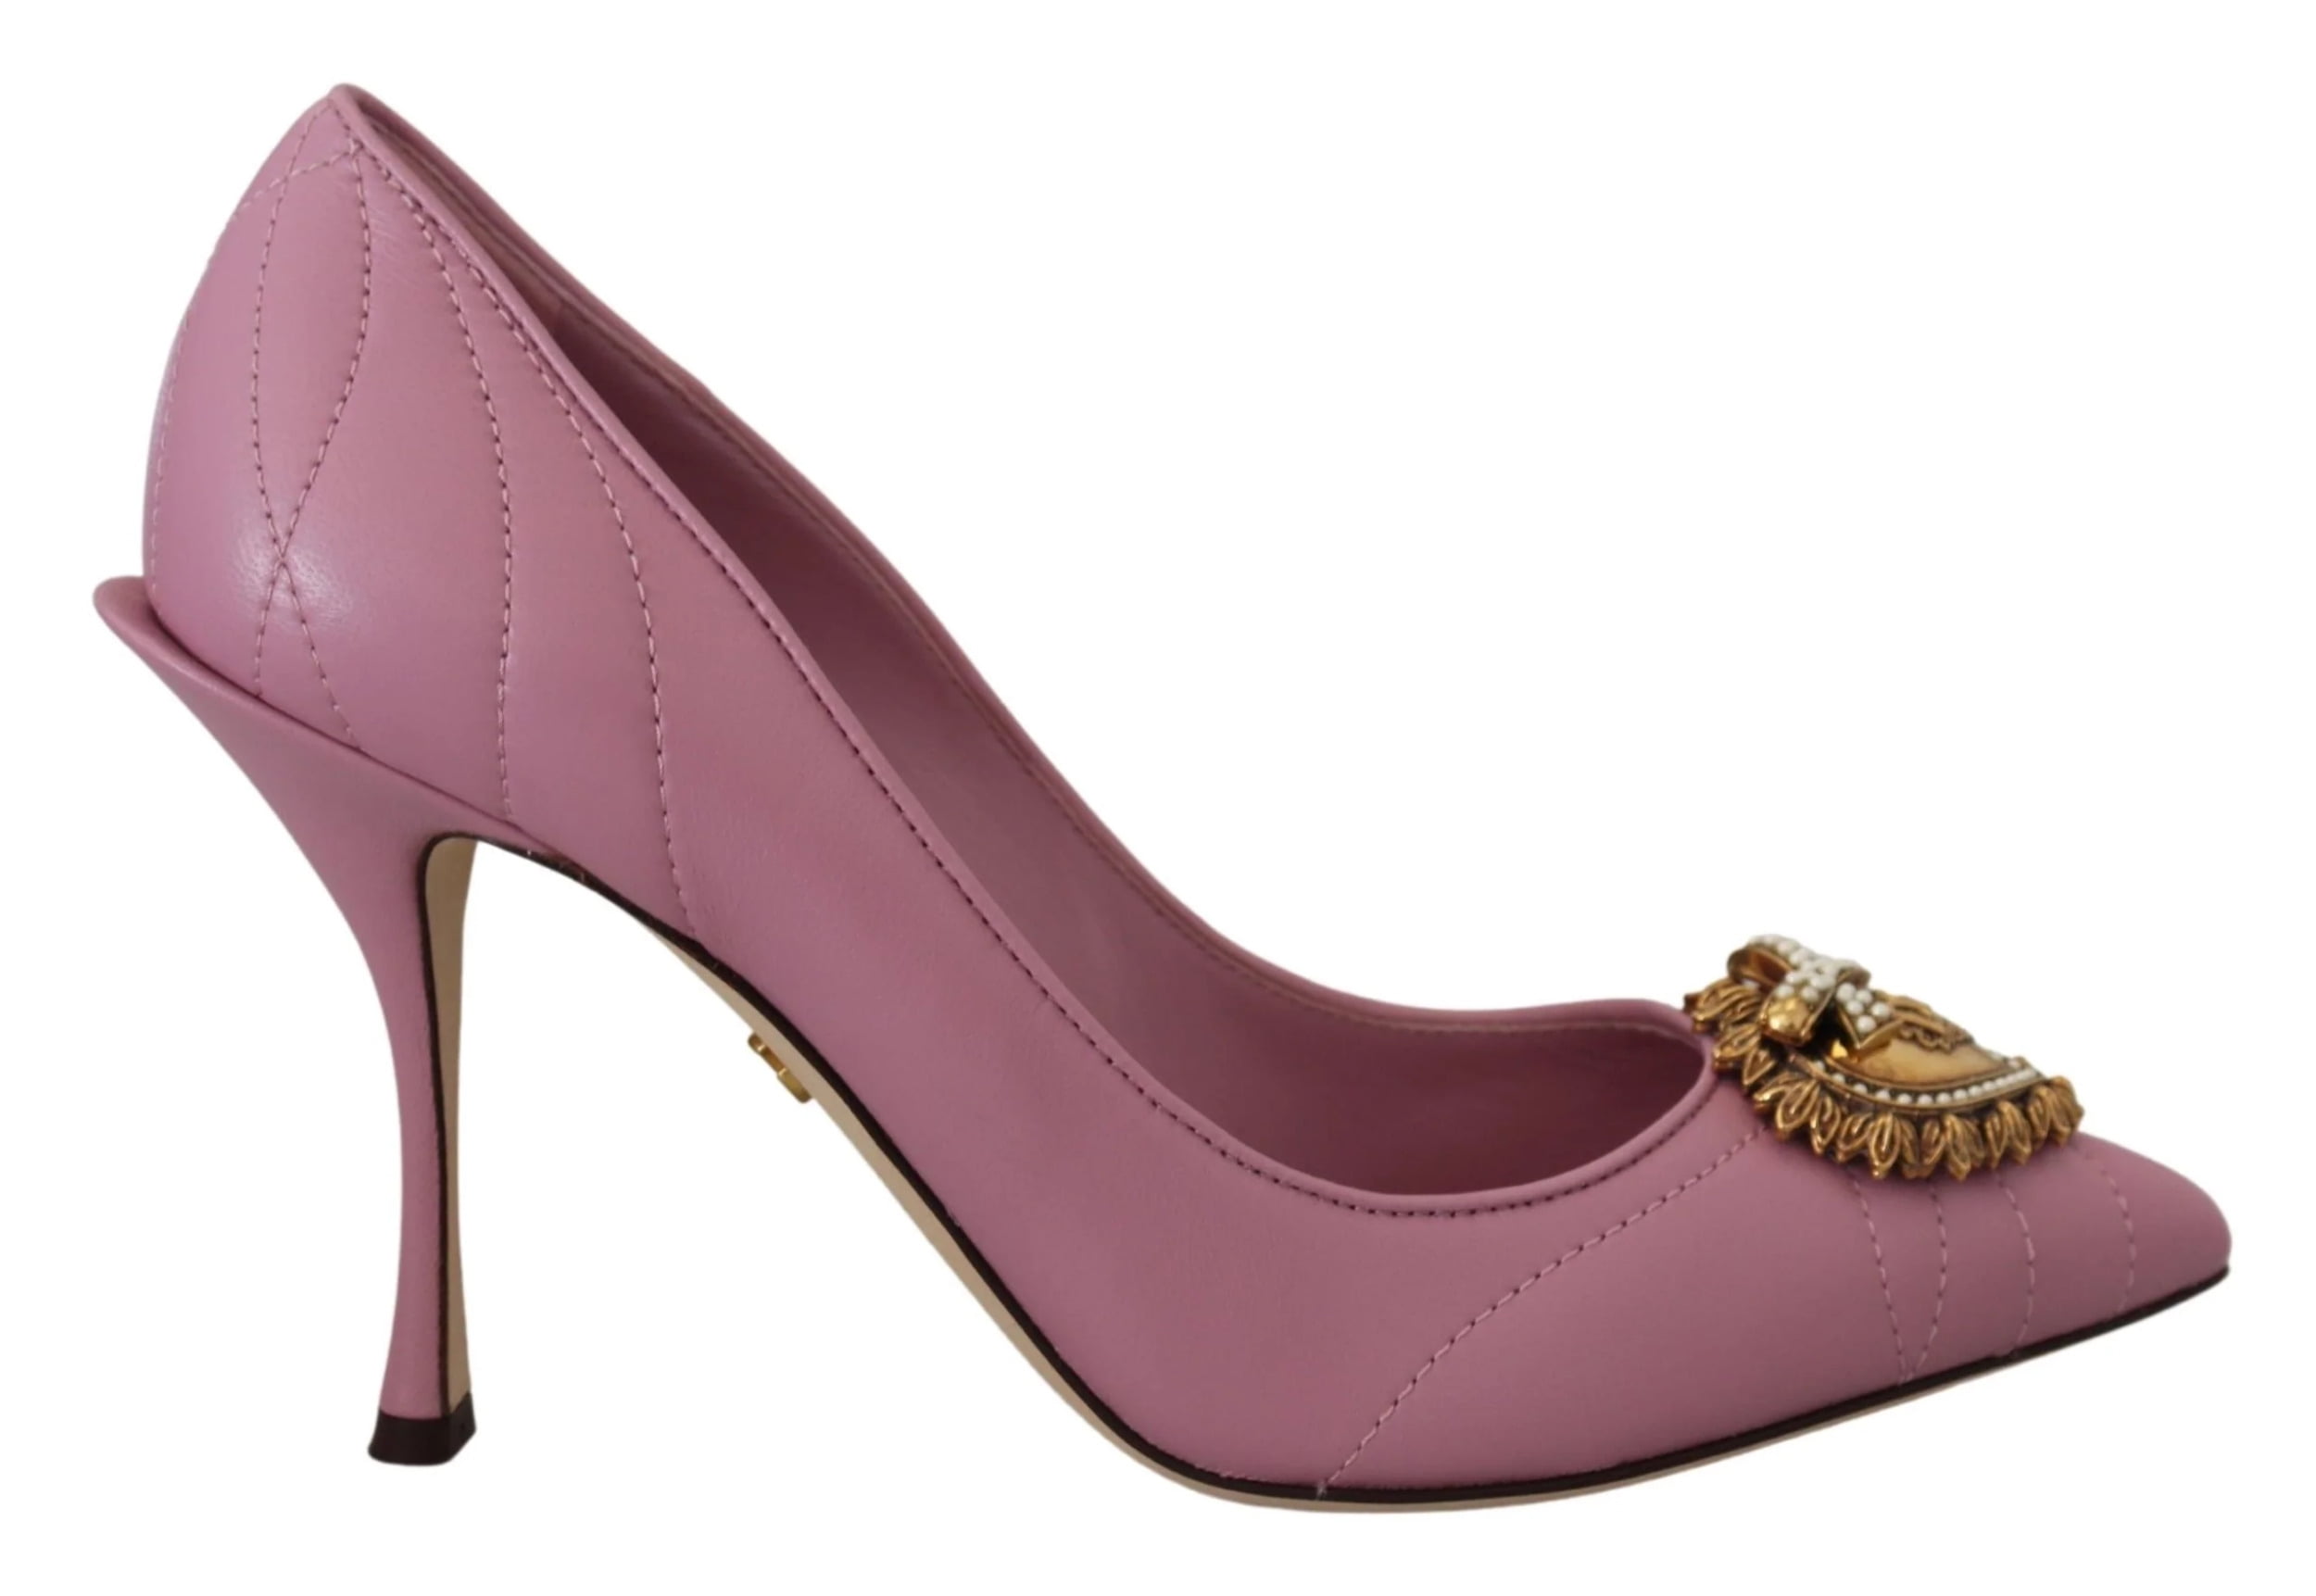 dolce & gabbana gold shoes | Heels, High heels, Beautiful shoes